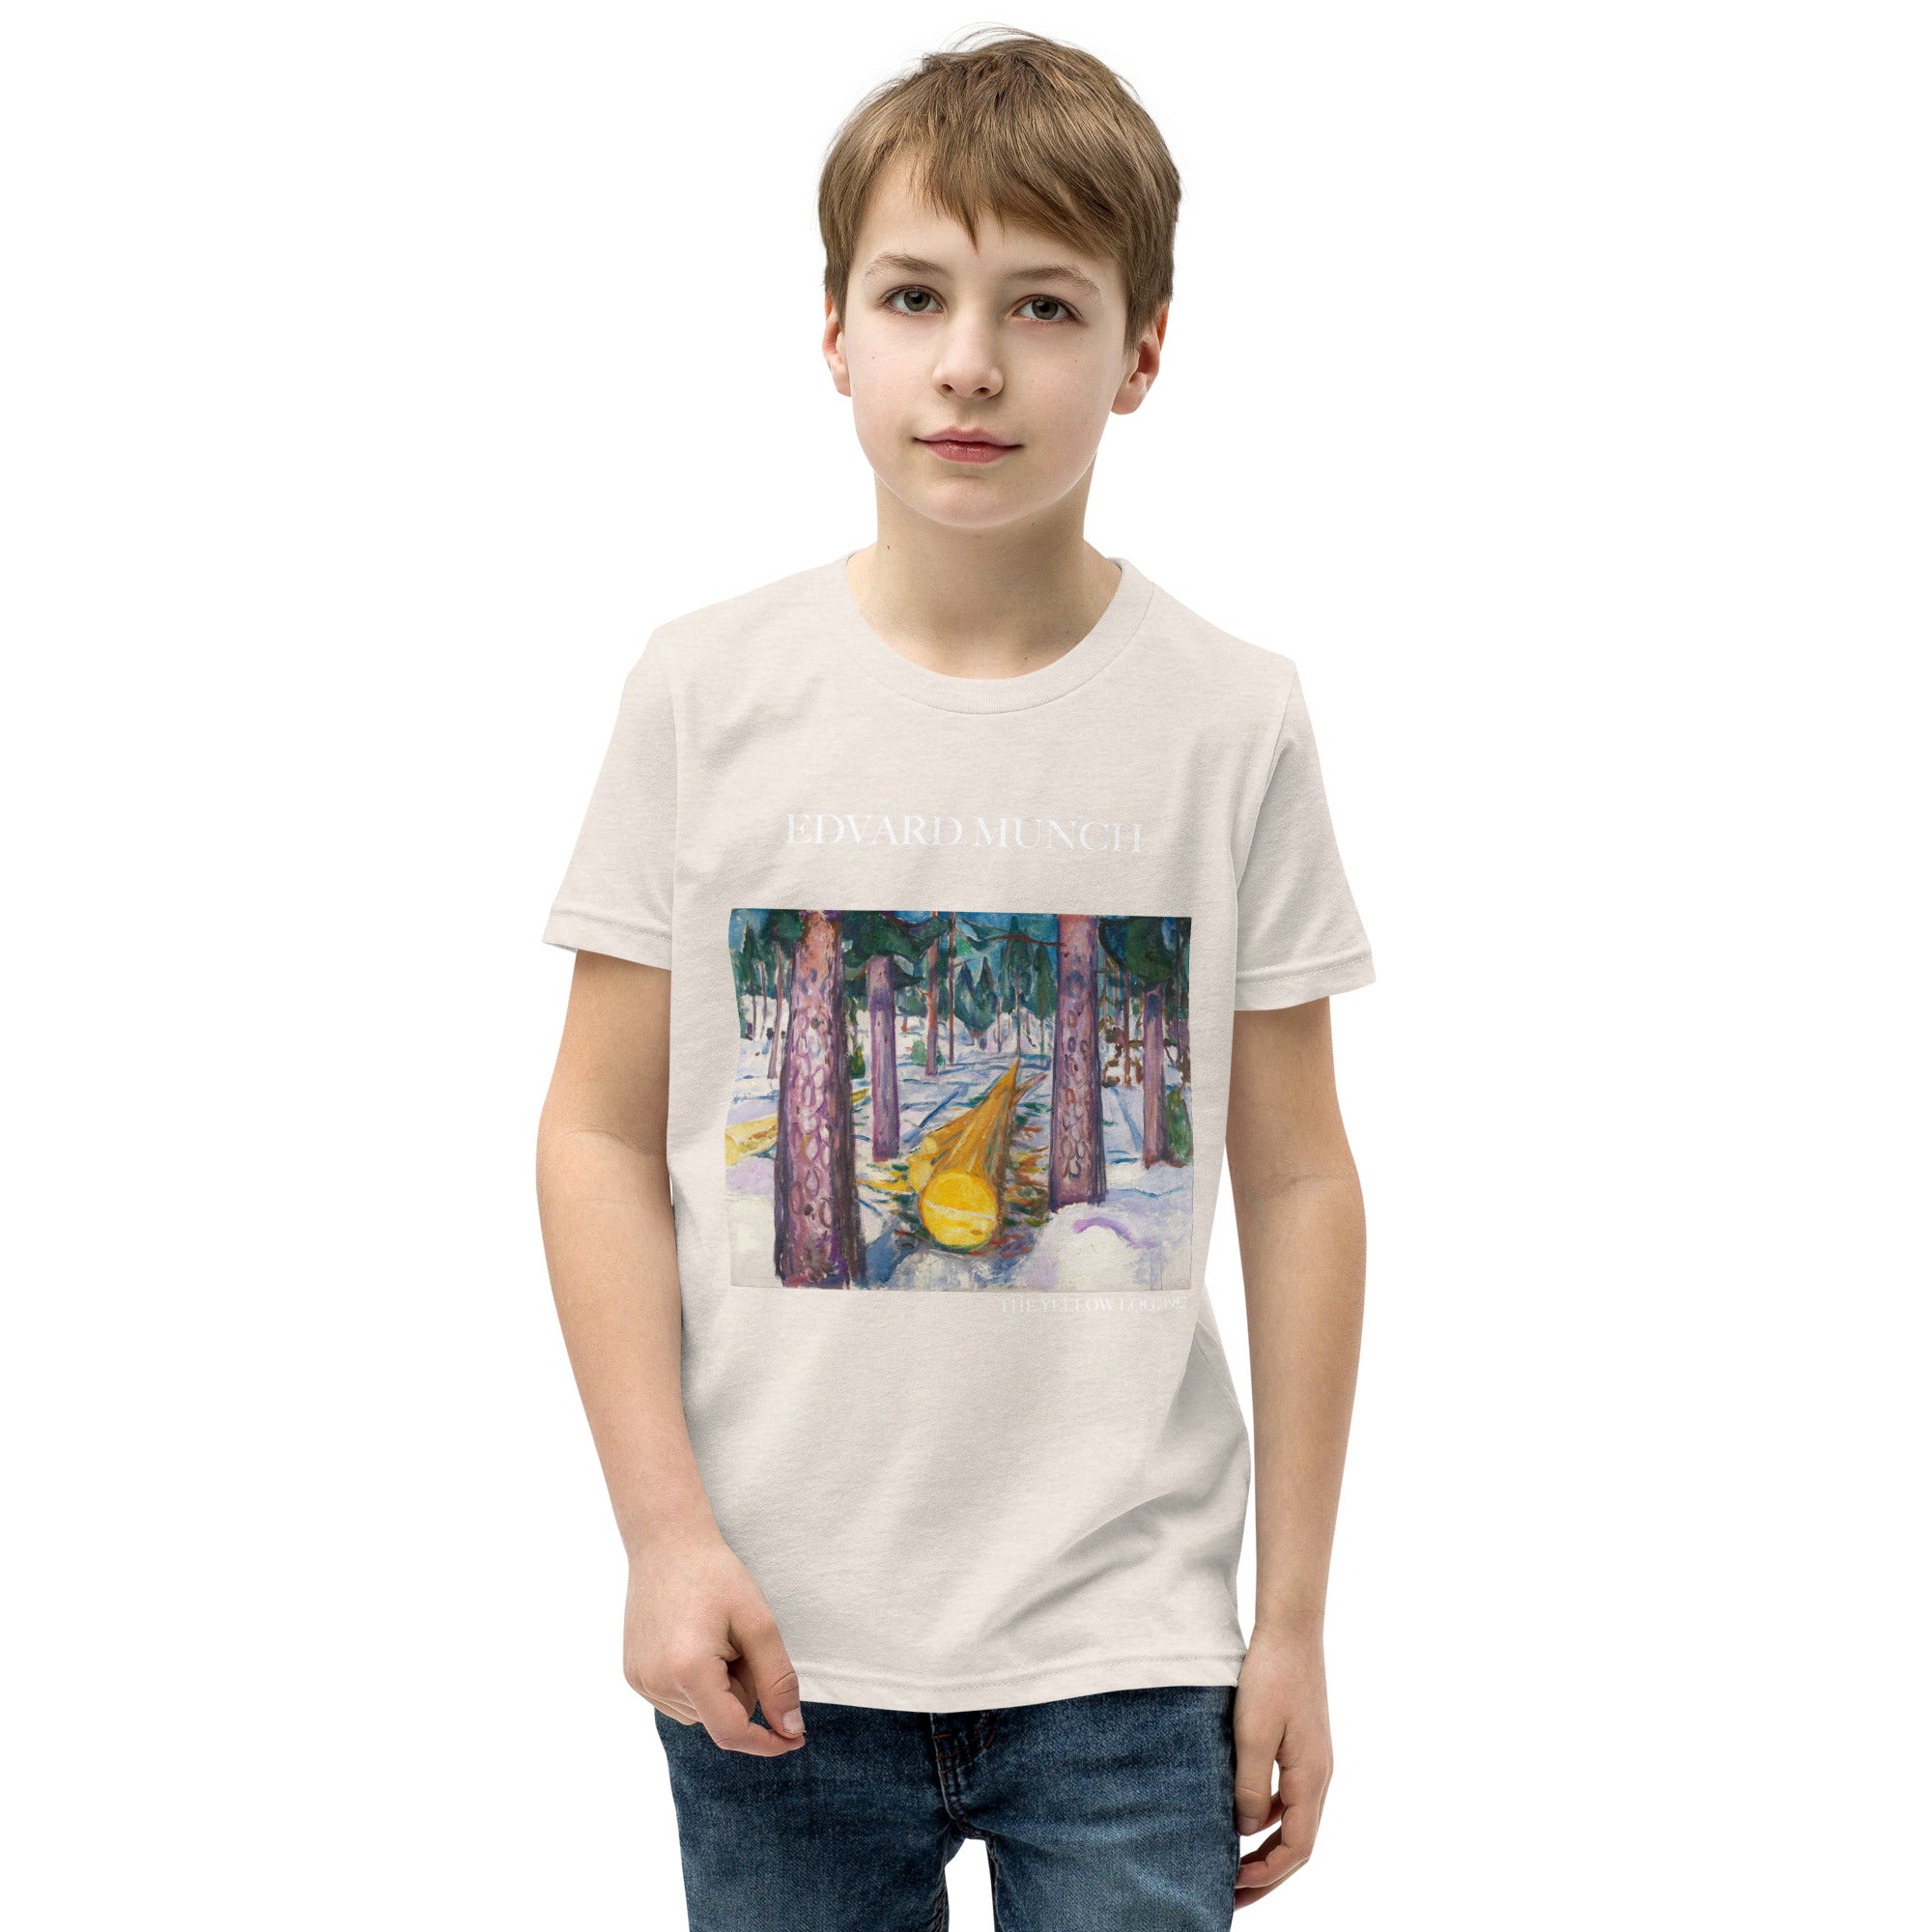 Edvard Munch 'The Yellow Log' Famous Painting Short Sleeve T-Shirt | Premium Youth Art Tee